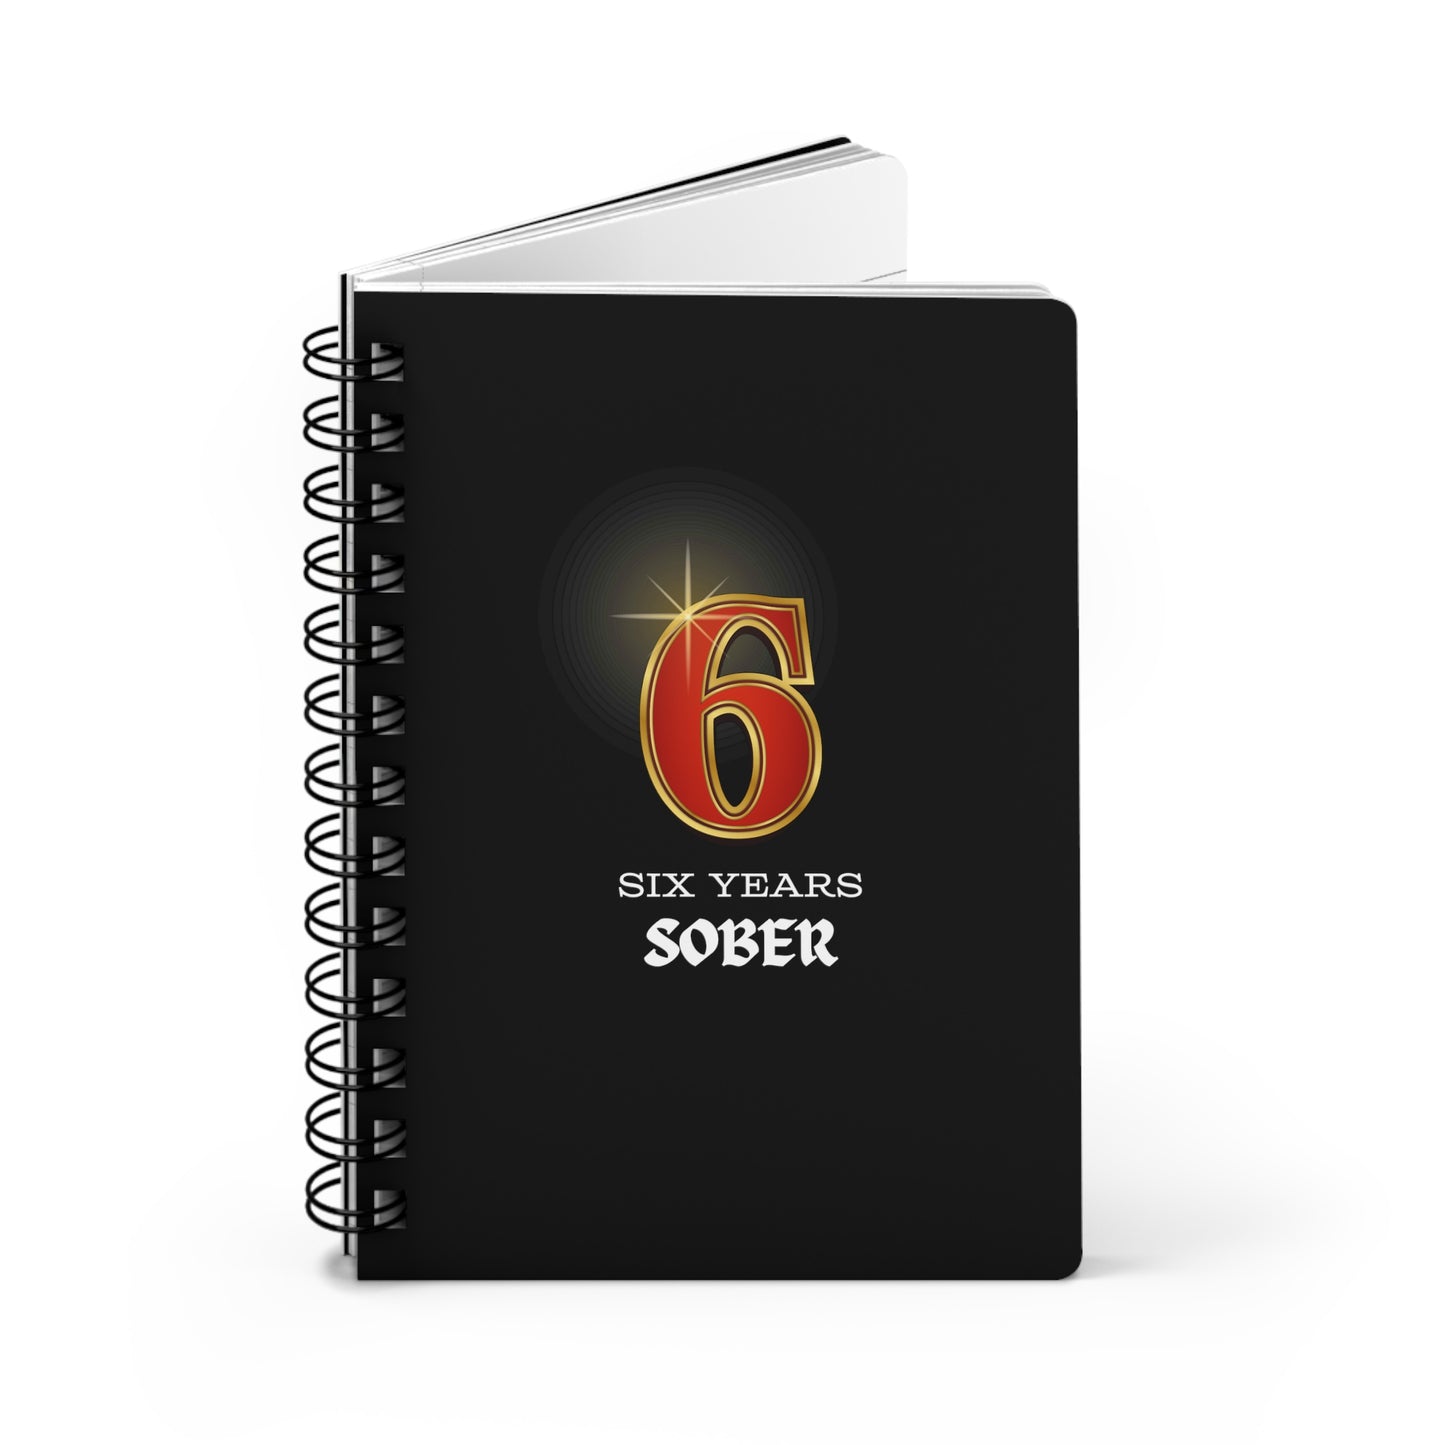 Sober Birthday Journal "Six Years" Spiral 5 x 7